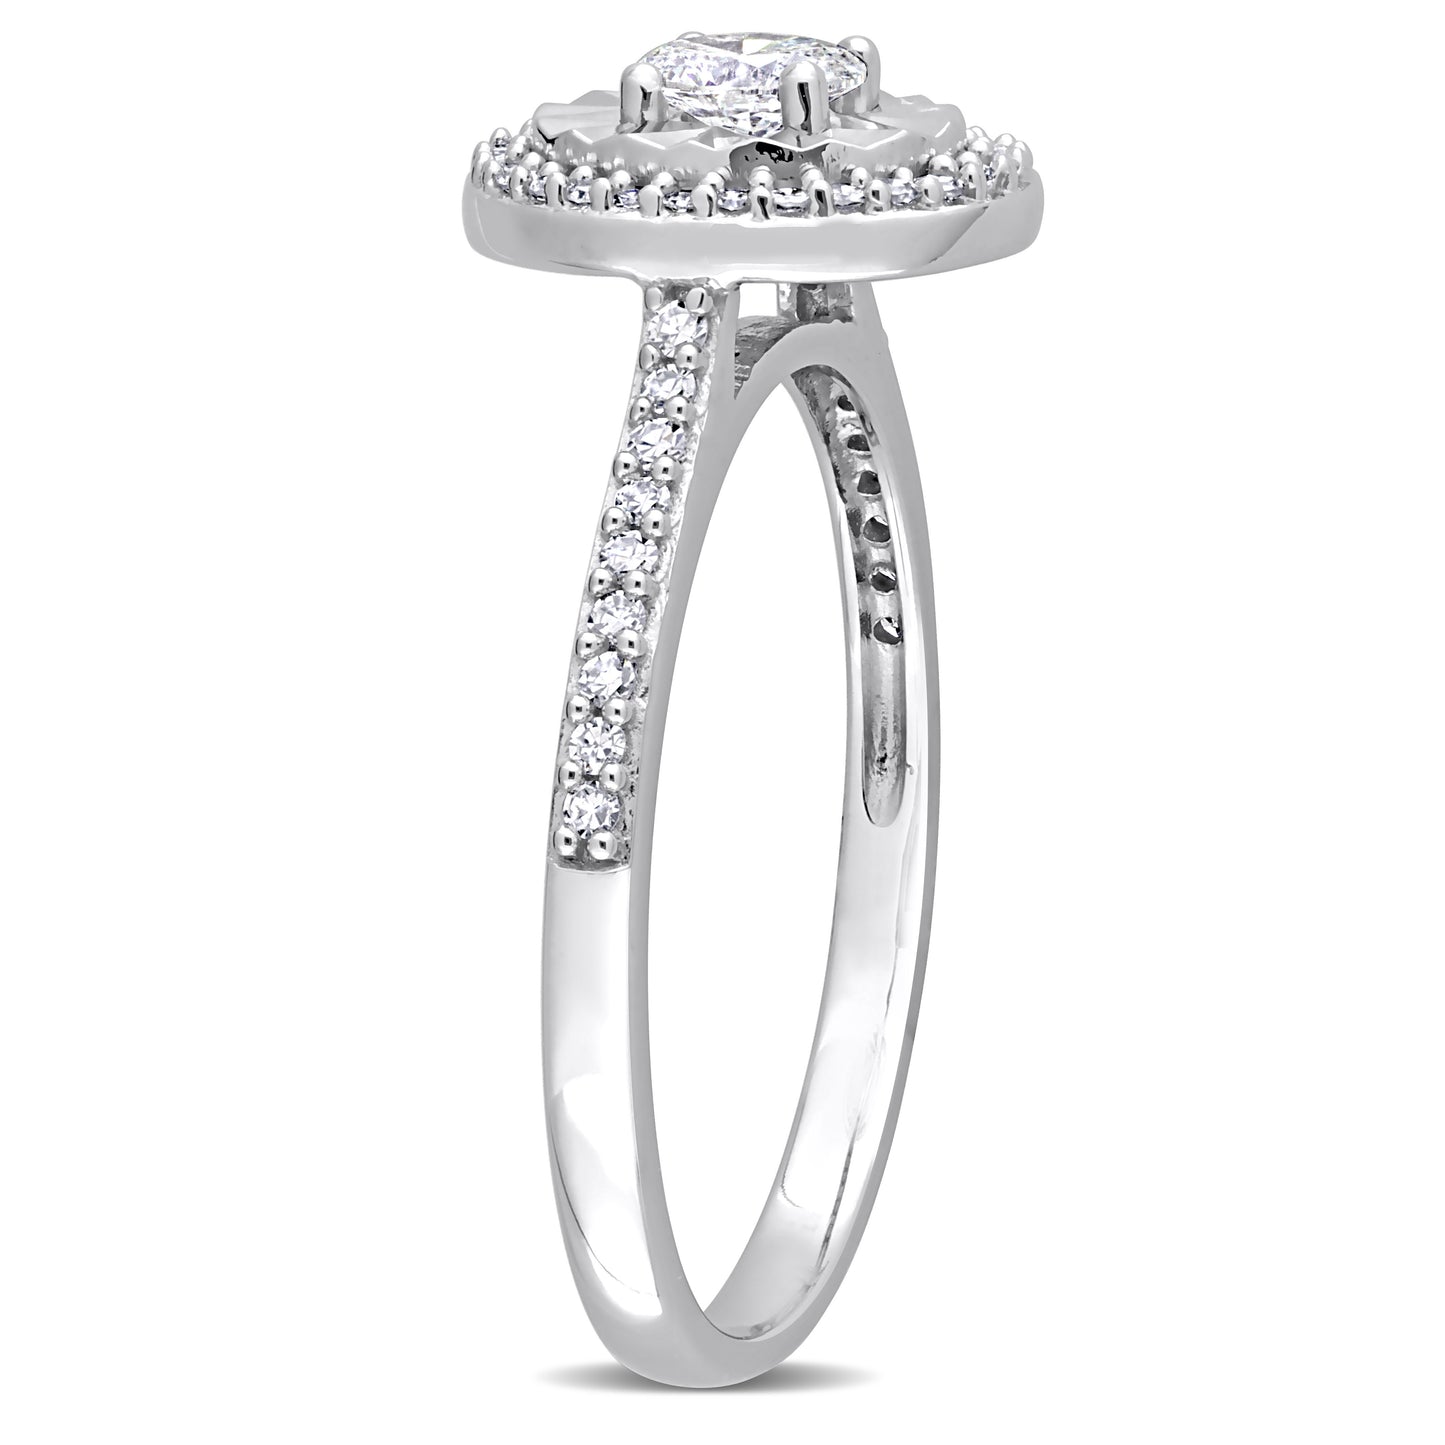 Oval Halo Diamond Ring in 14k White Gold